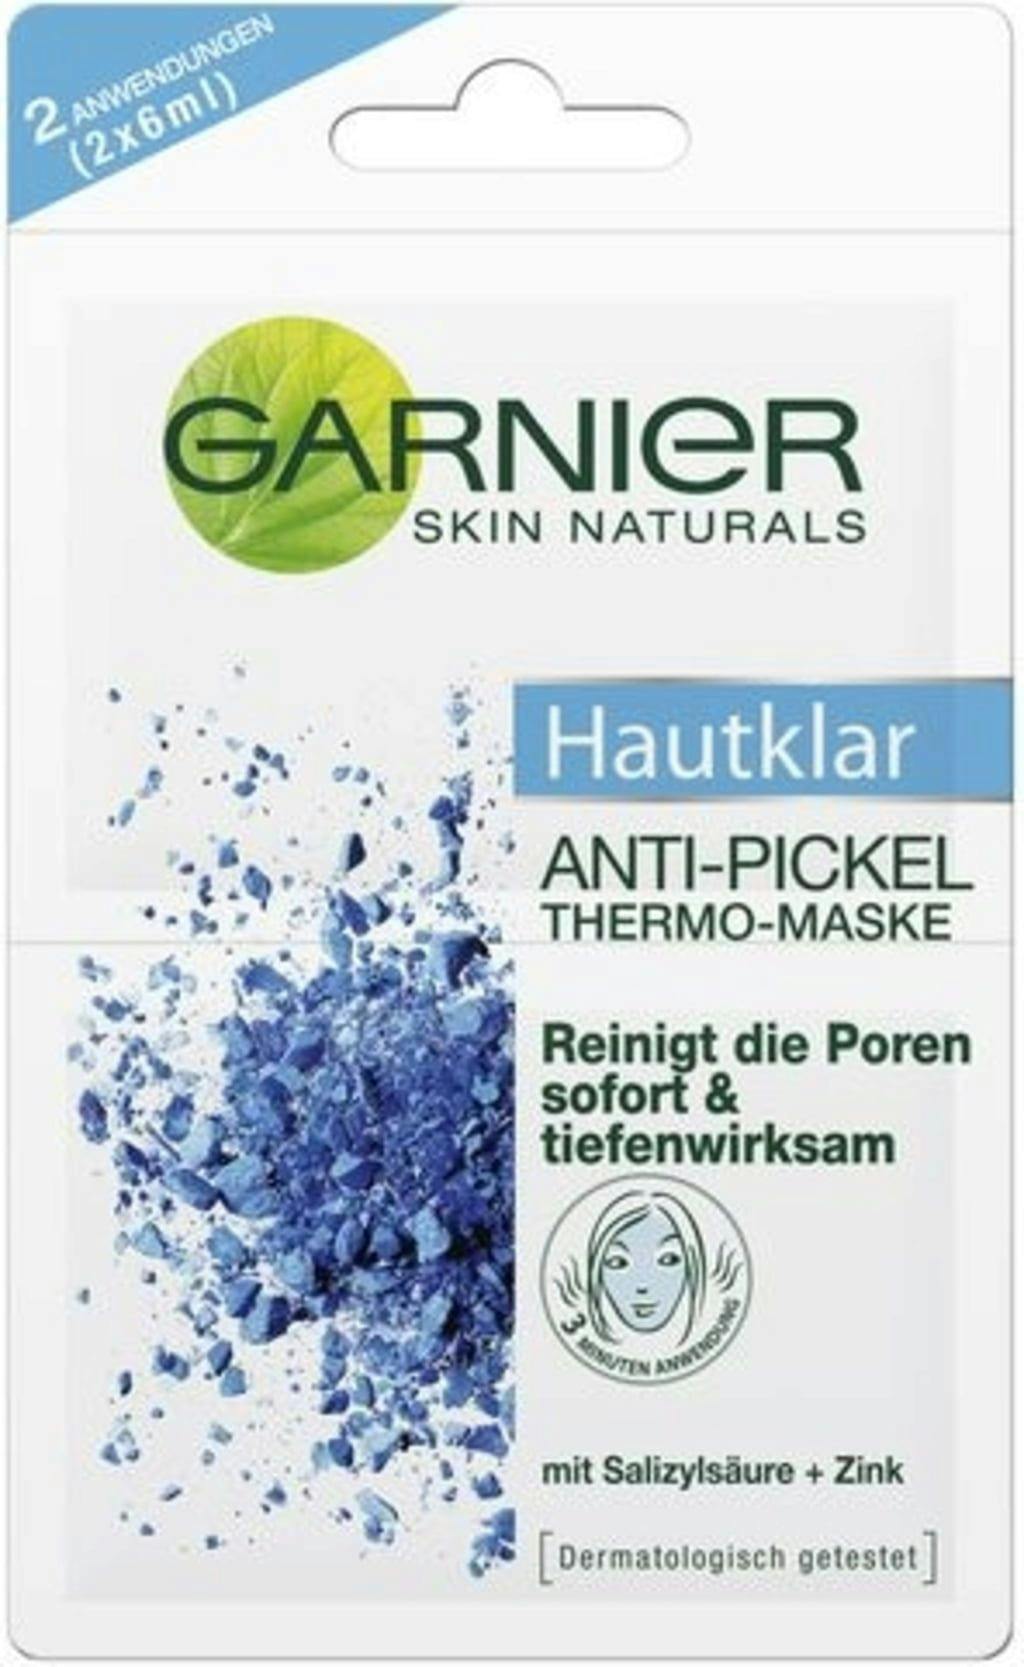 Skin Naturals Skin Clear Anti-Blemish Thermal Mask Розпарююча маска проти чорних крапок і жирного блиску з цинком